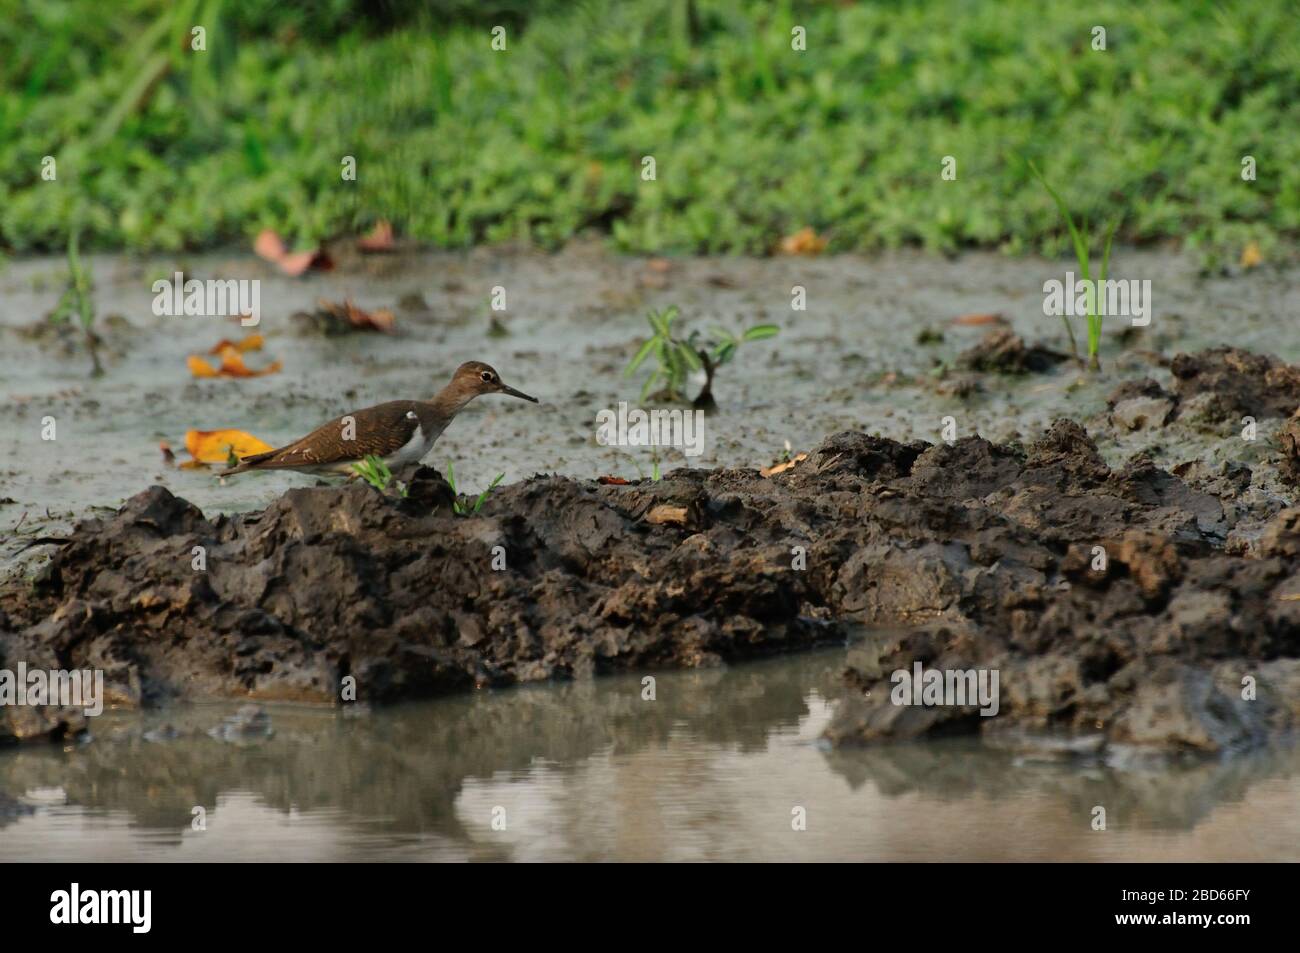 Common sandpiper in mud at pond Stock Photo